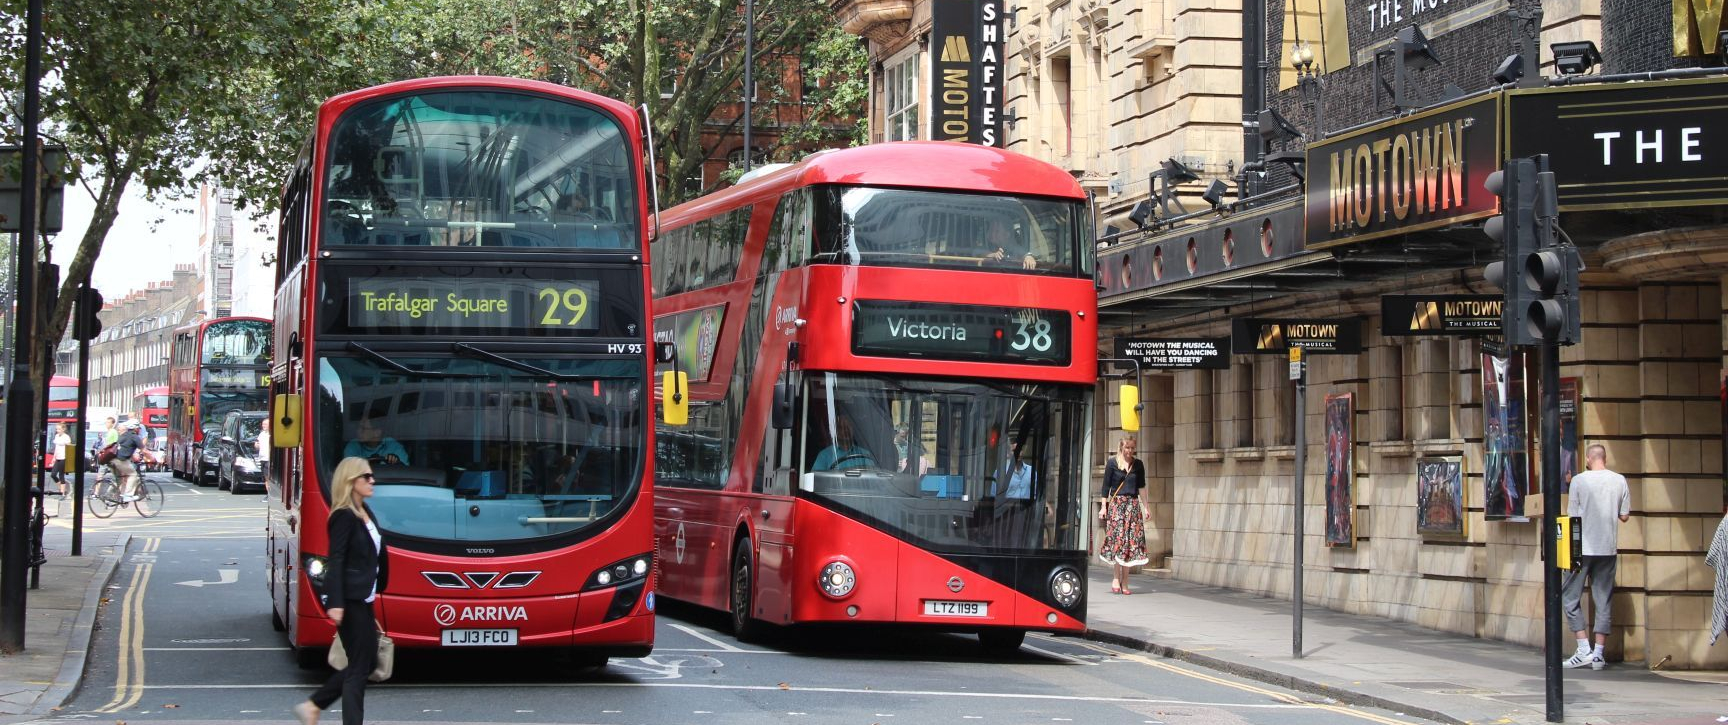 Bus oder UBahn was ist besser? Another LondonBlog